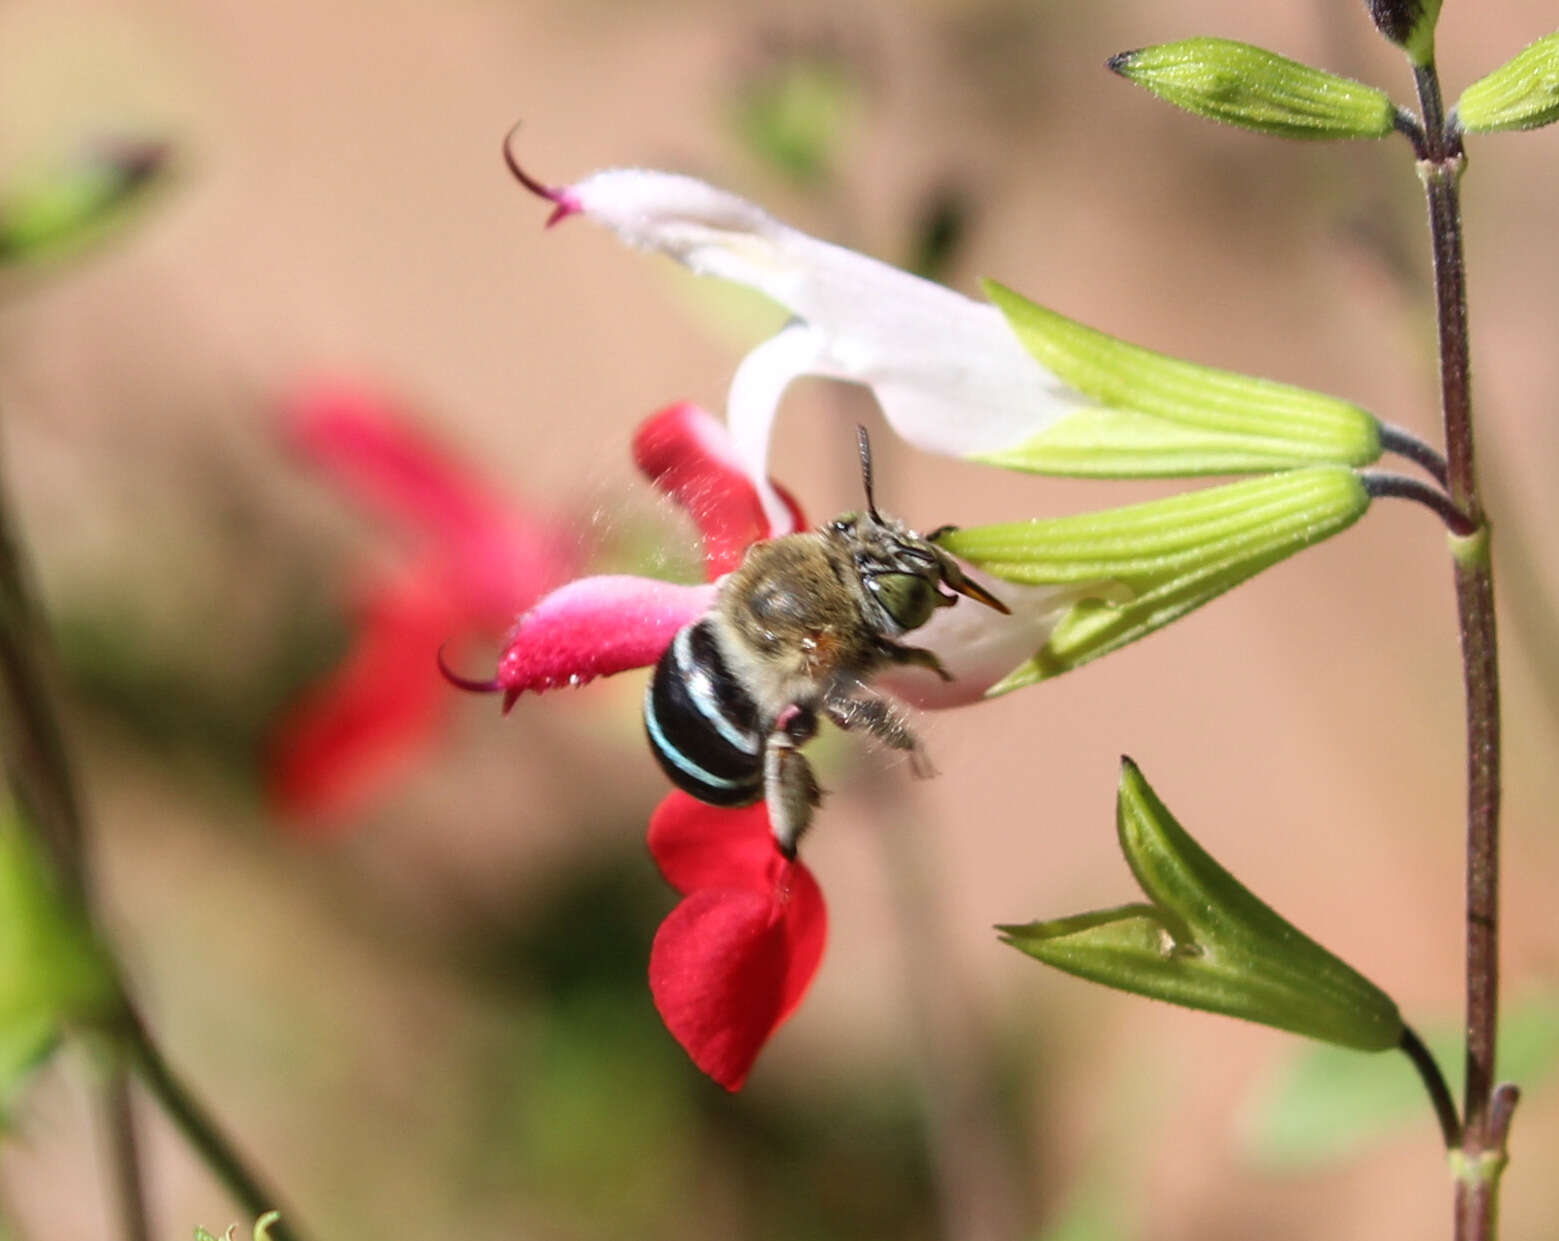 Image of Anthophorine Bees